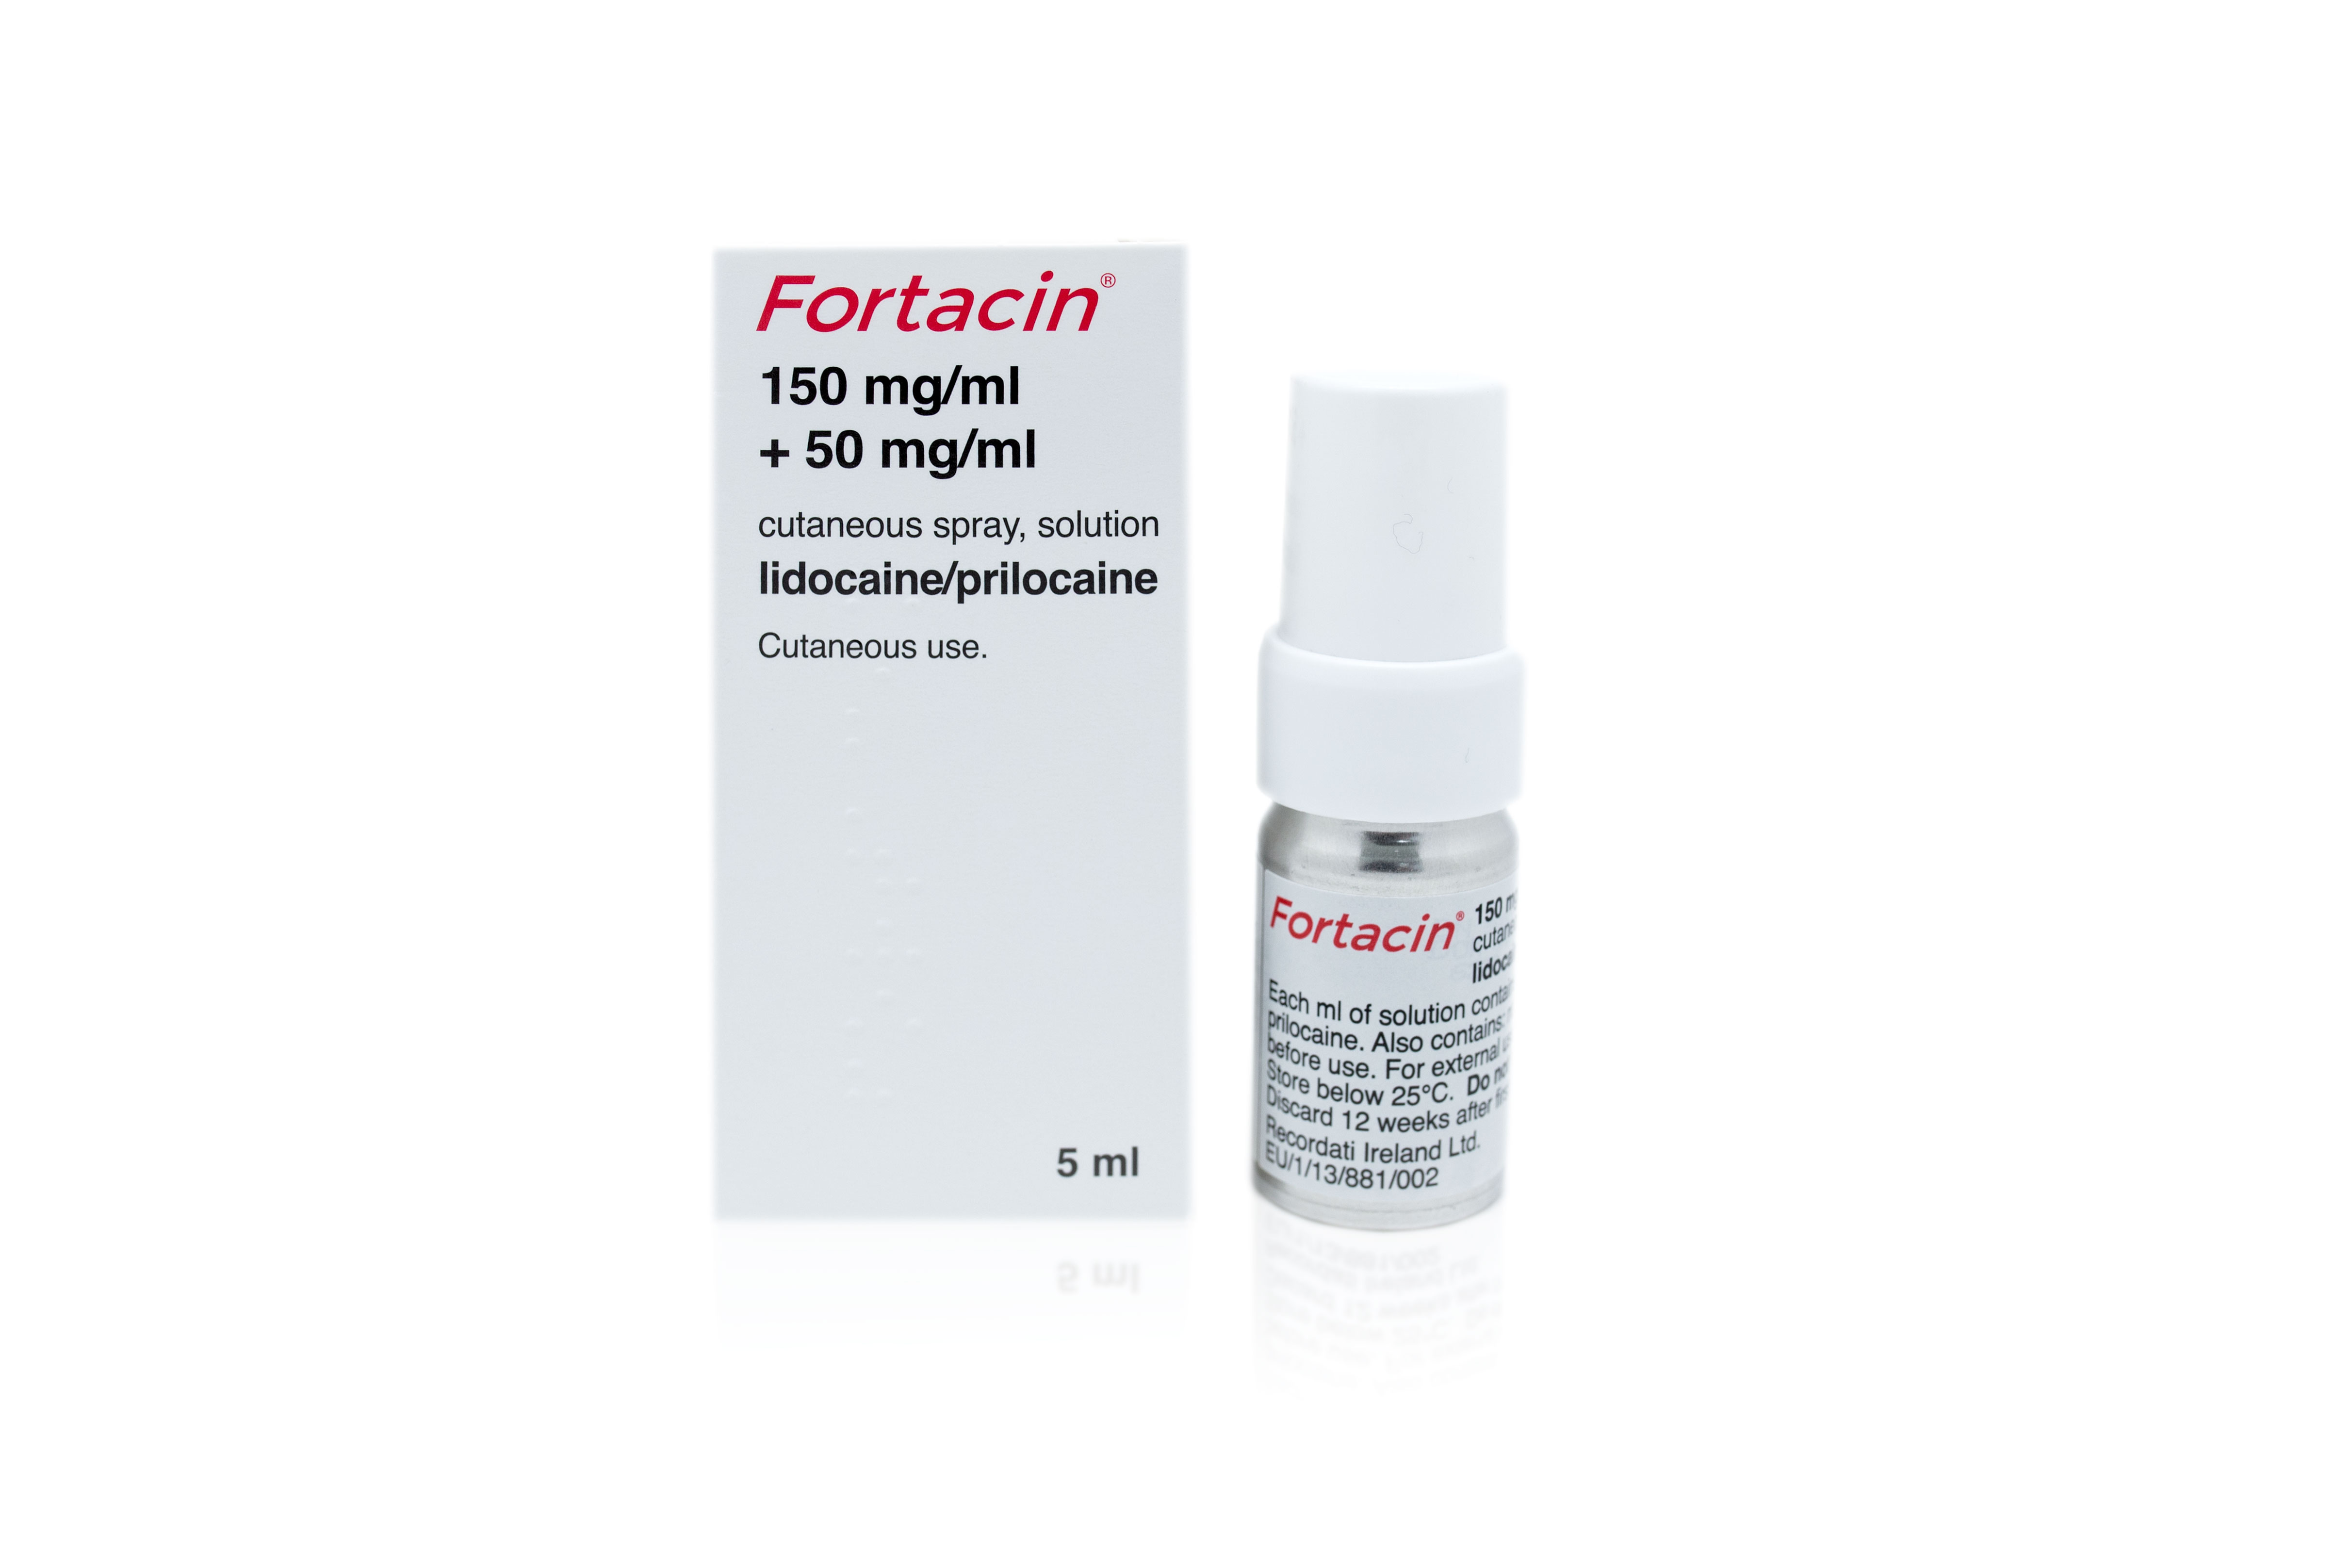 Buy Fortacin online at Doctor-4-U